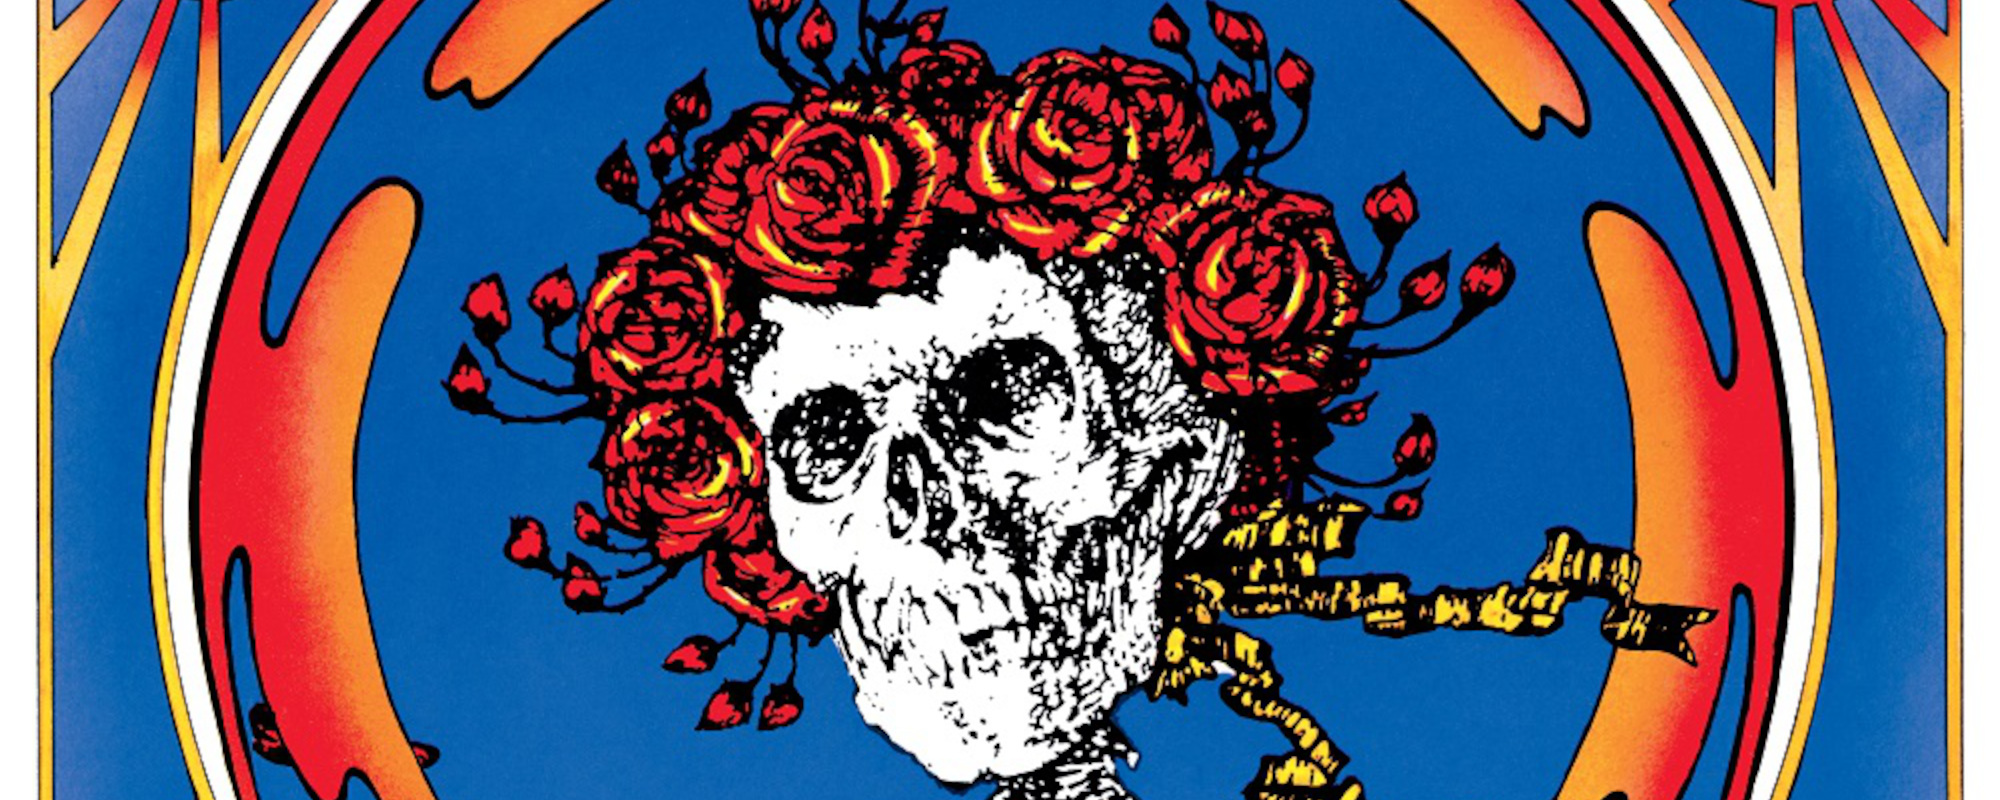 Review: Grateful Dead’s Self-Titled Album